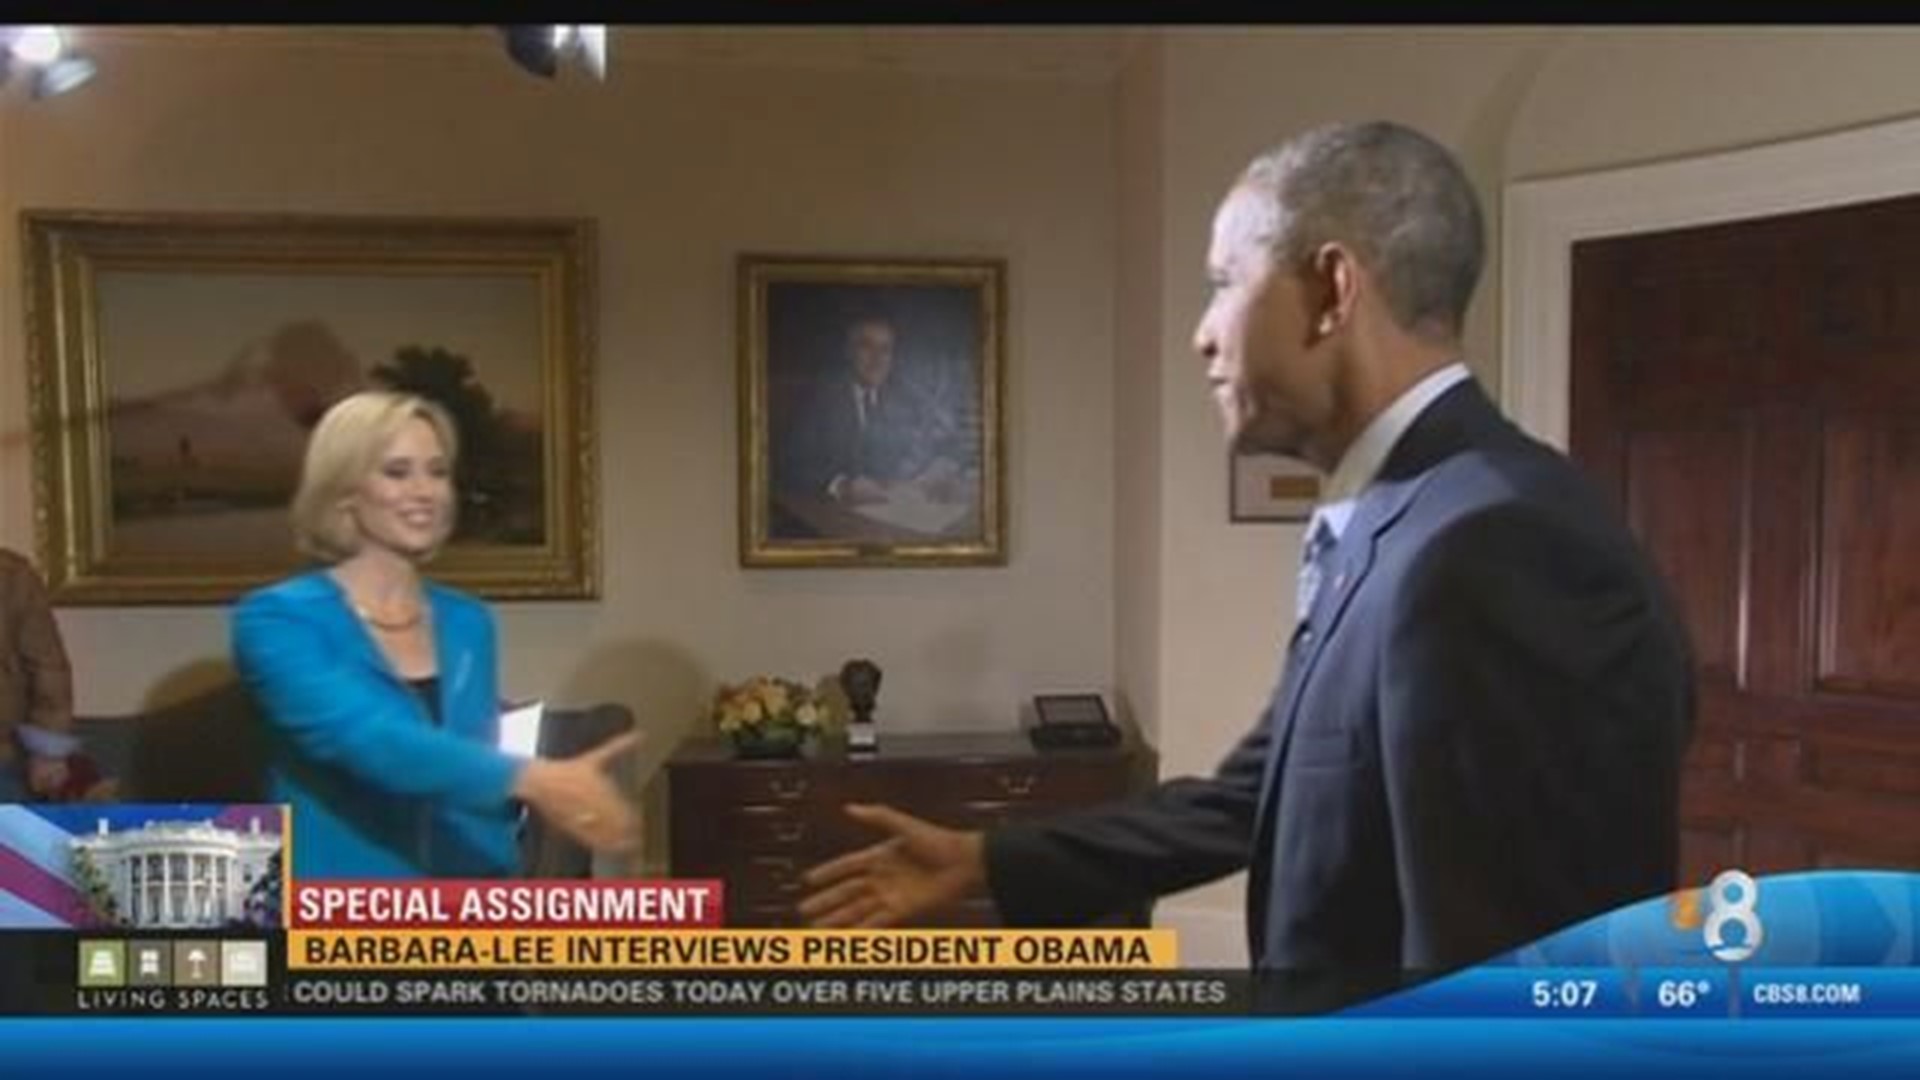 Barbara-Lee Edwards interviews President Obama 